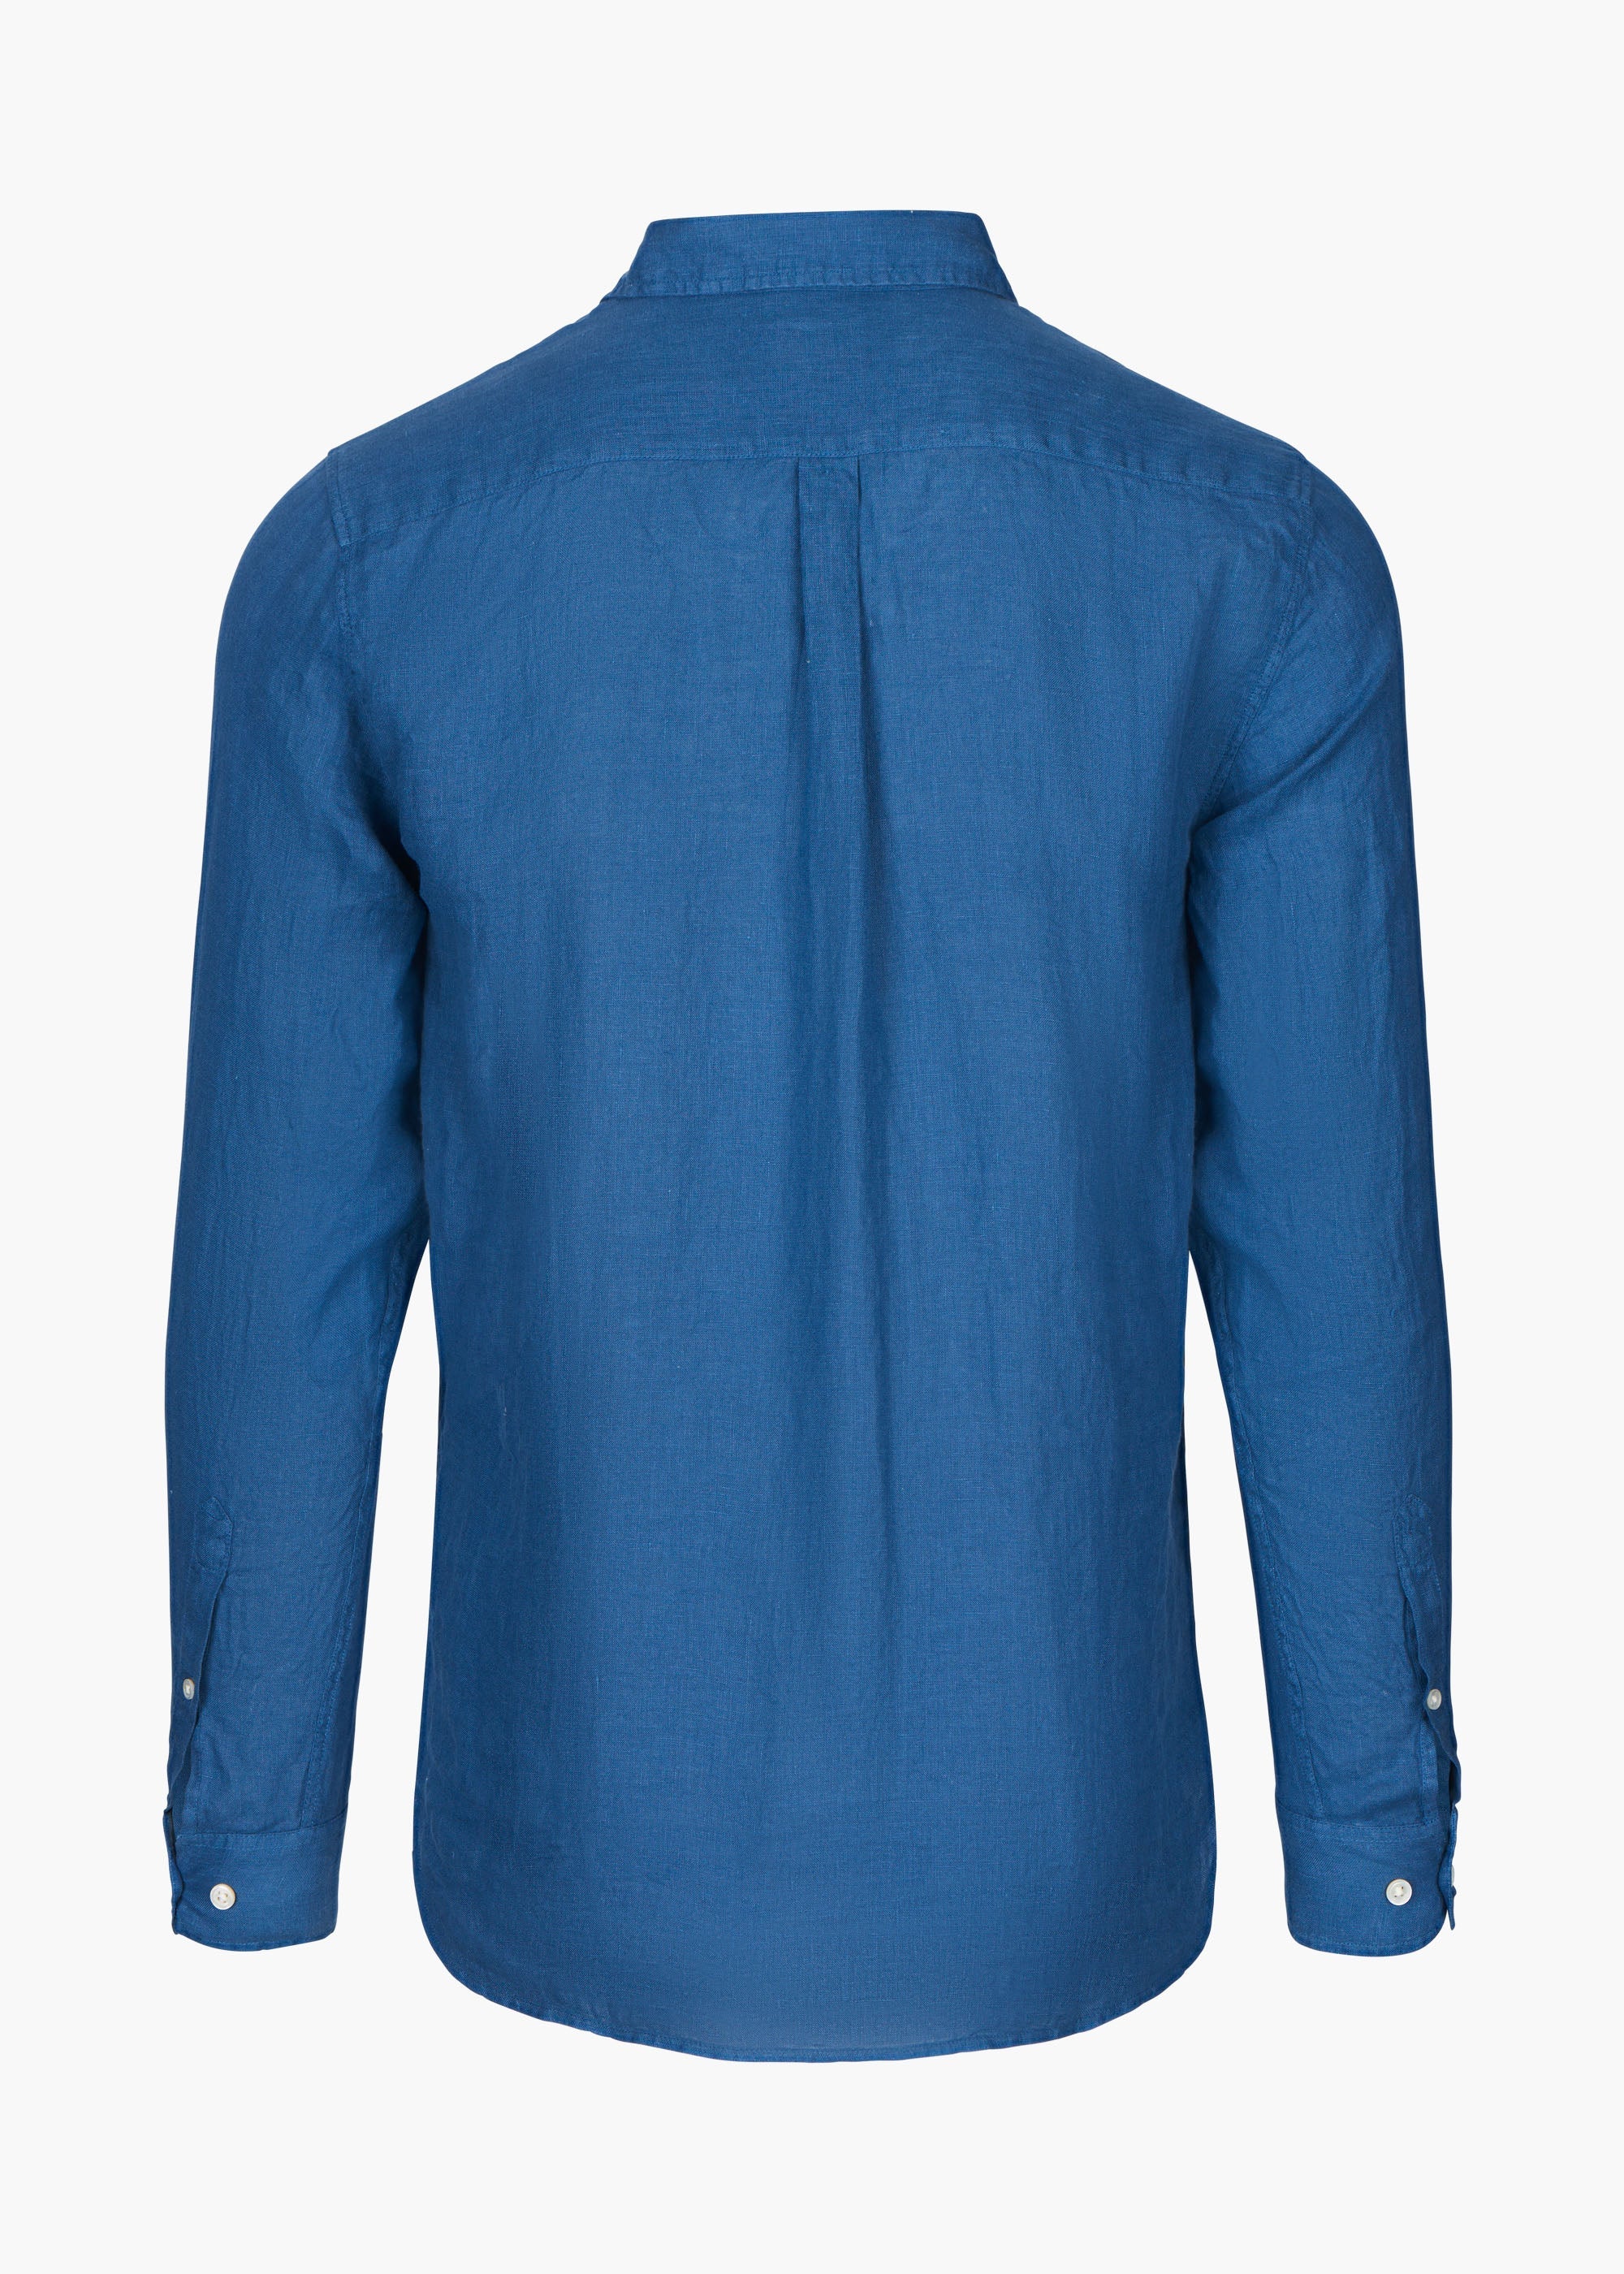 Amalfi Linen Shirt - background::white,variant::Ensign Blue